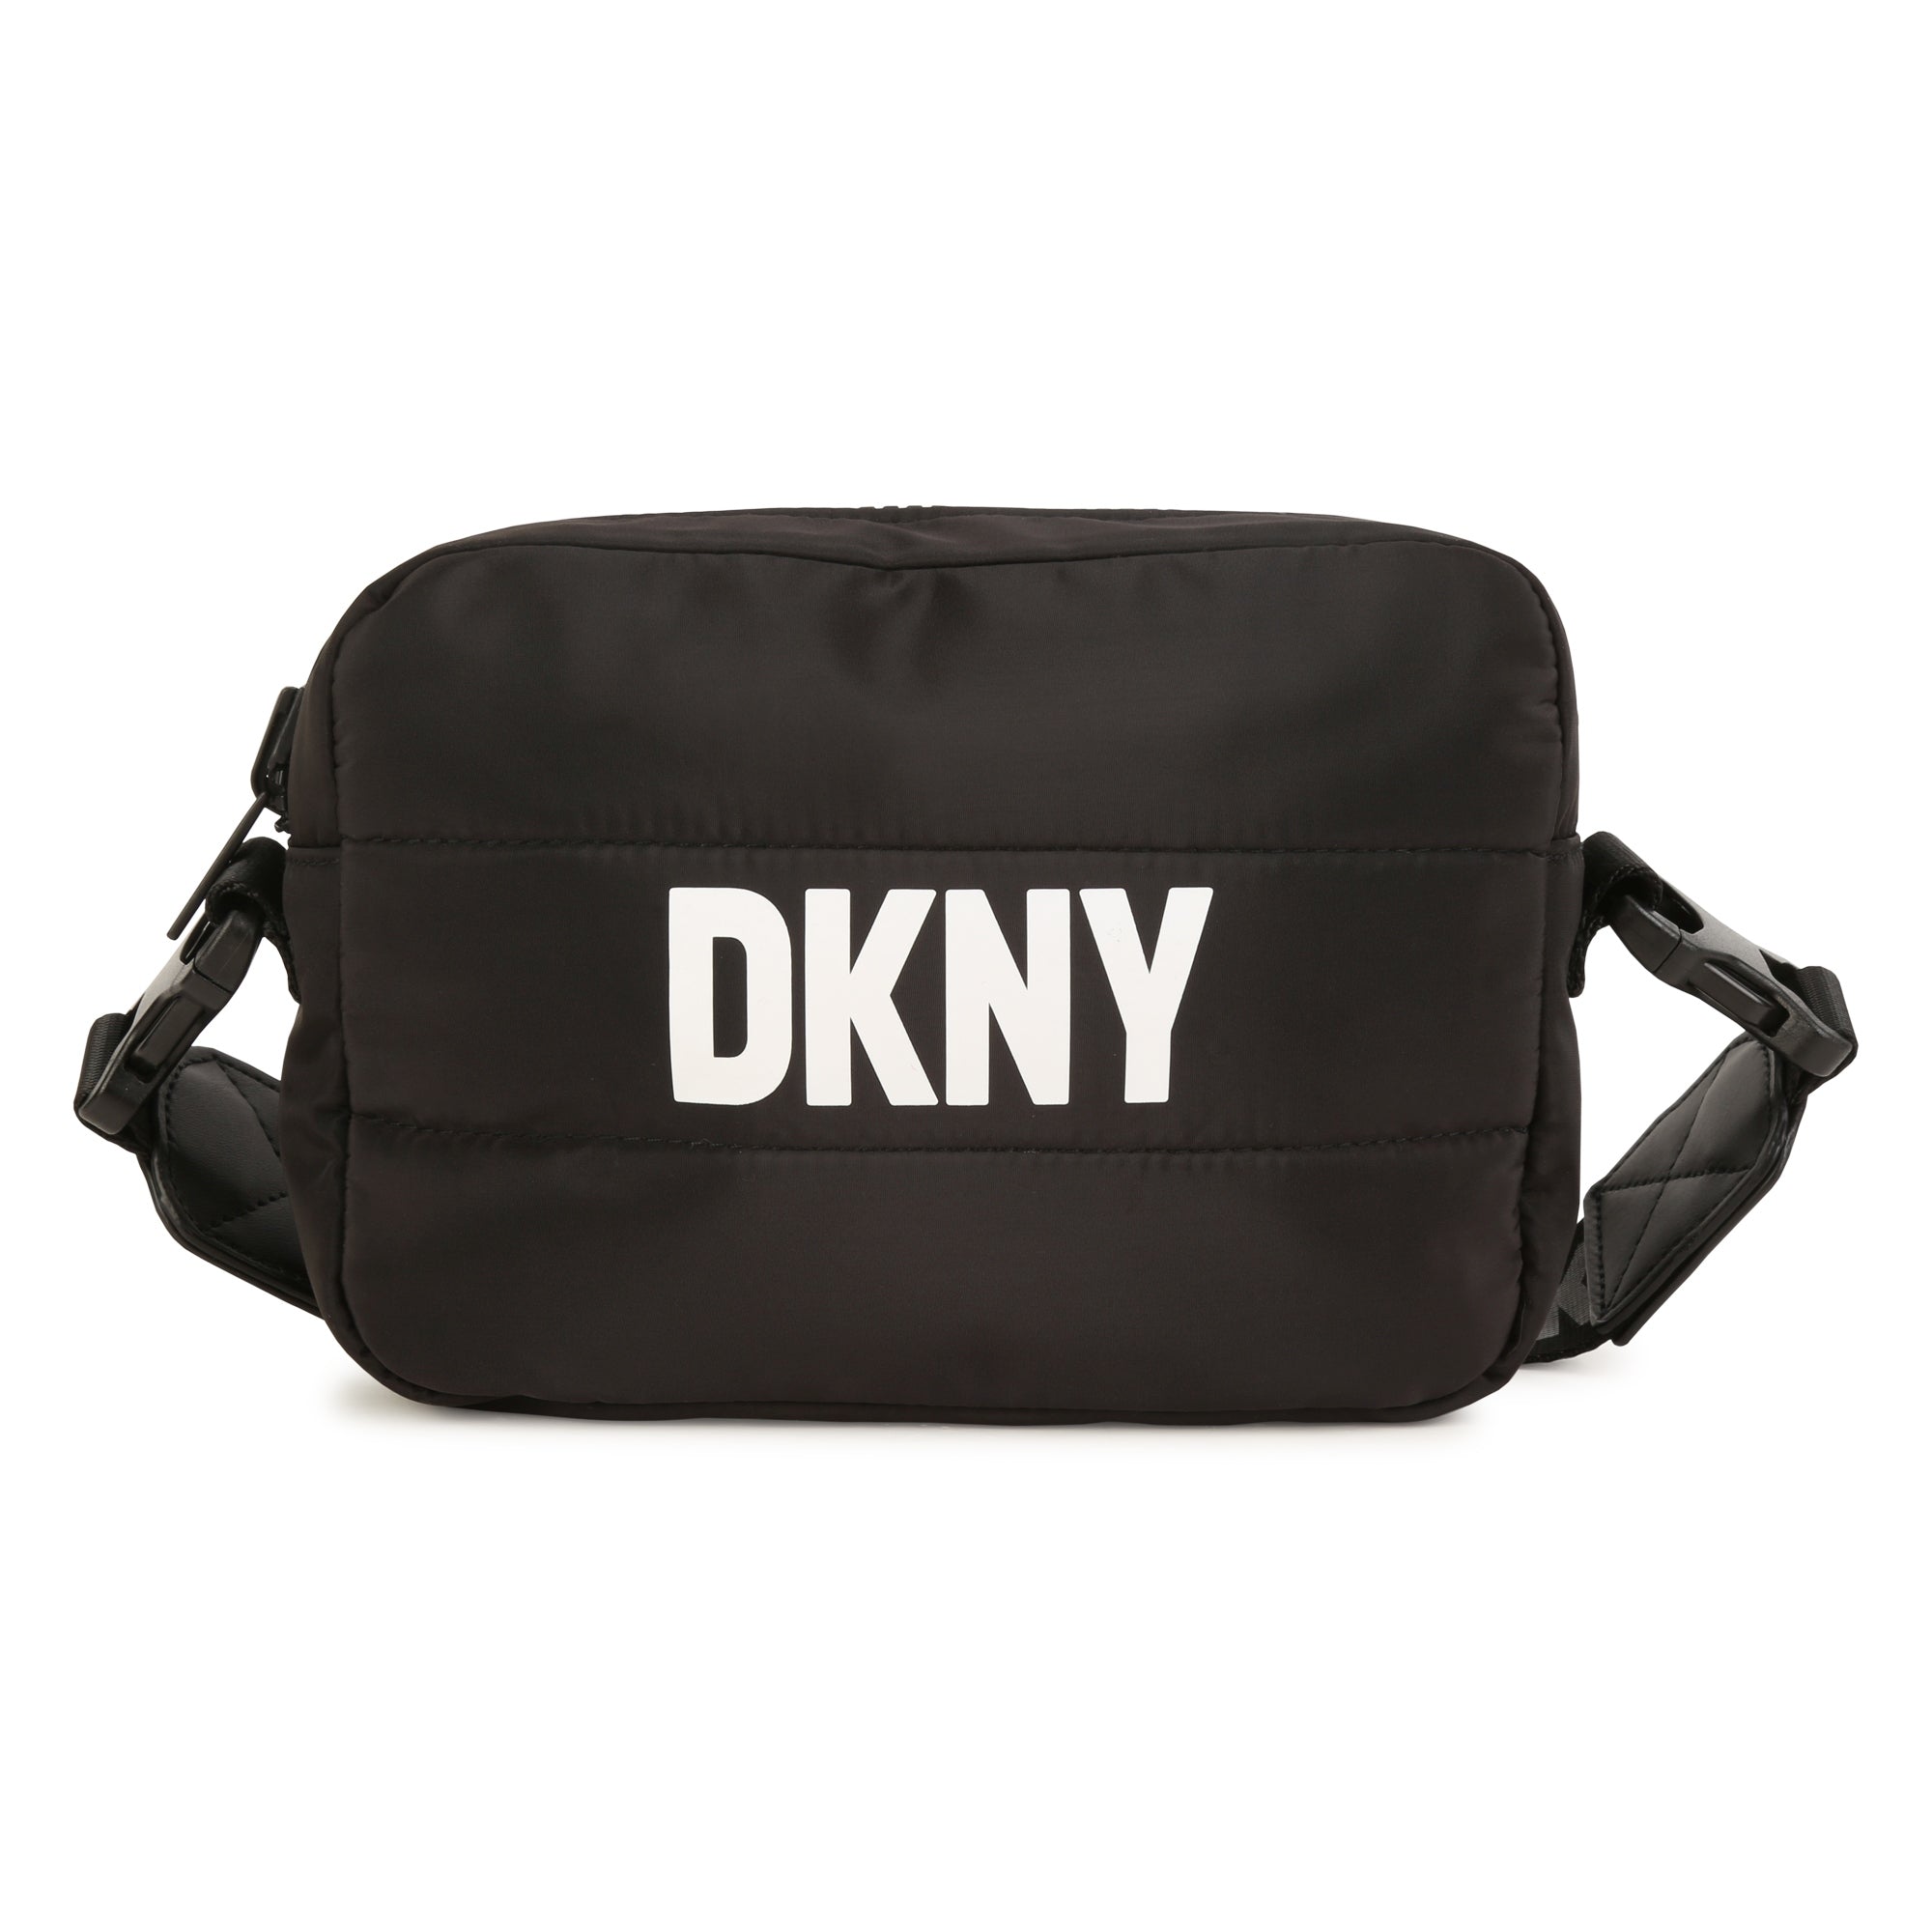 dkny crossbody bag